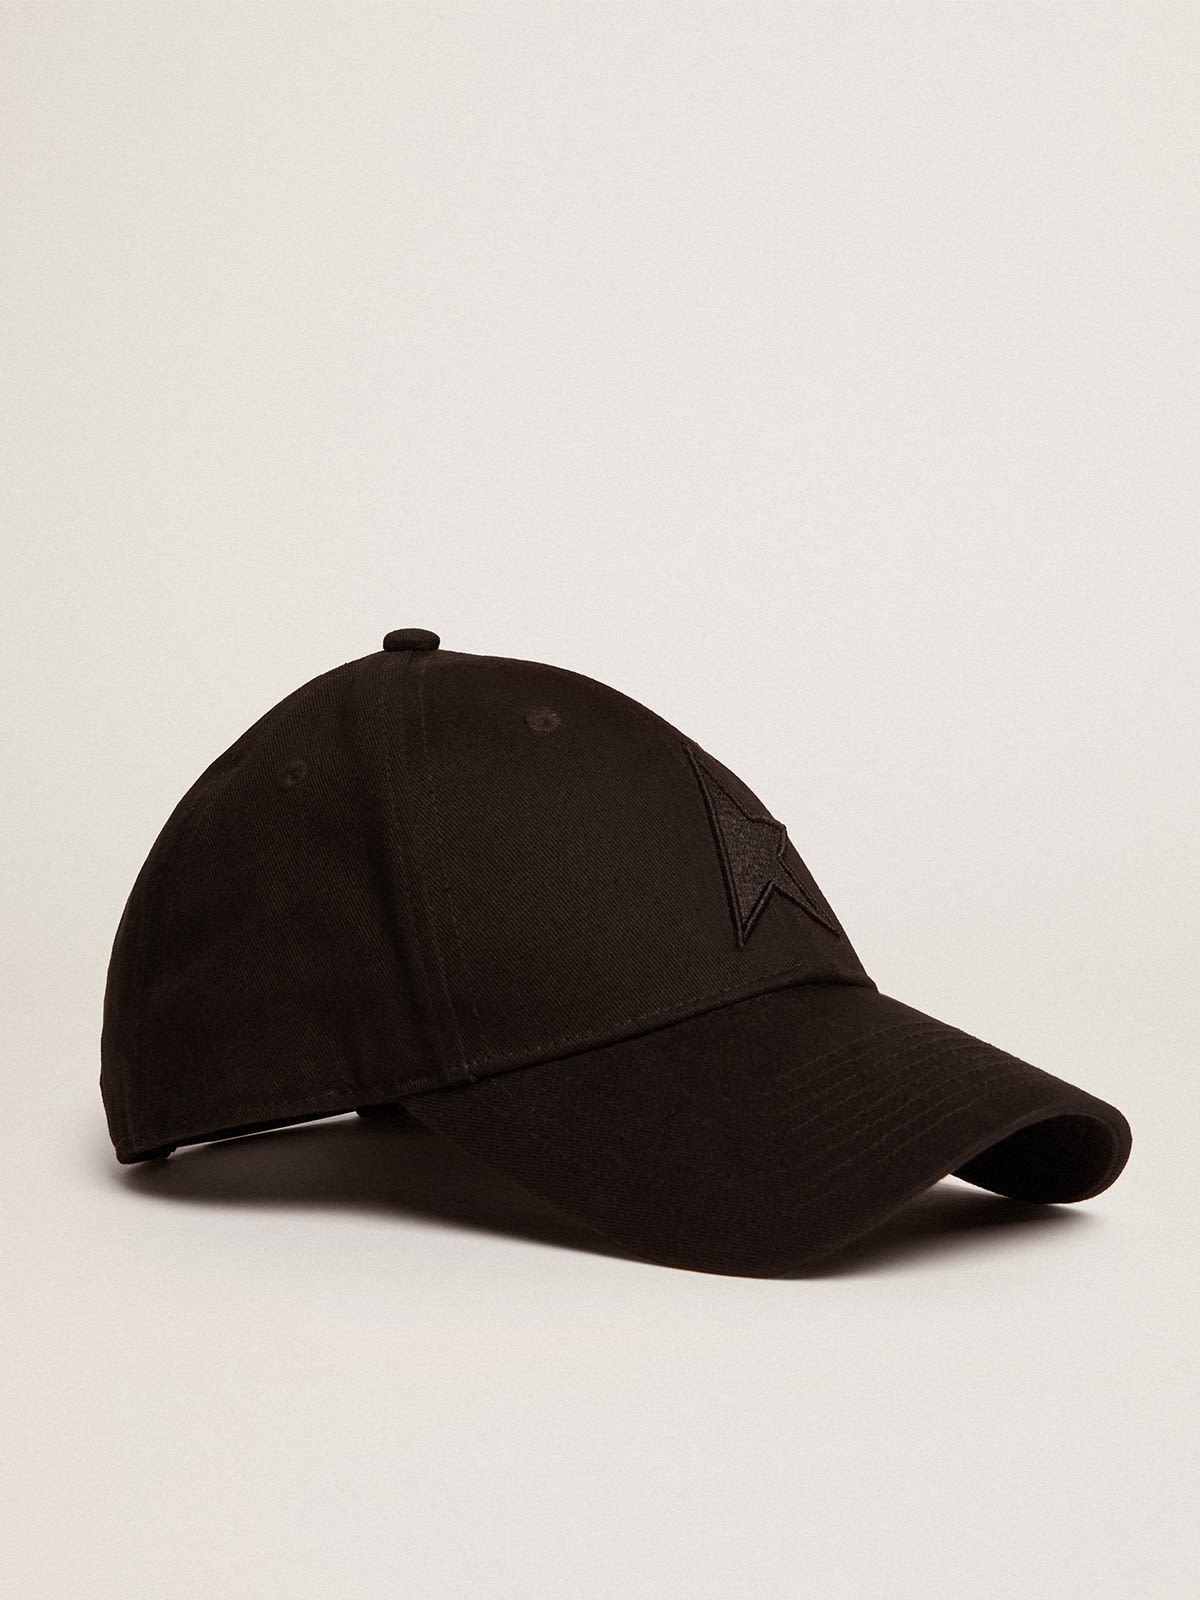 Black baseball cap with star - 2